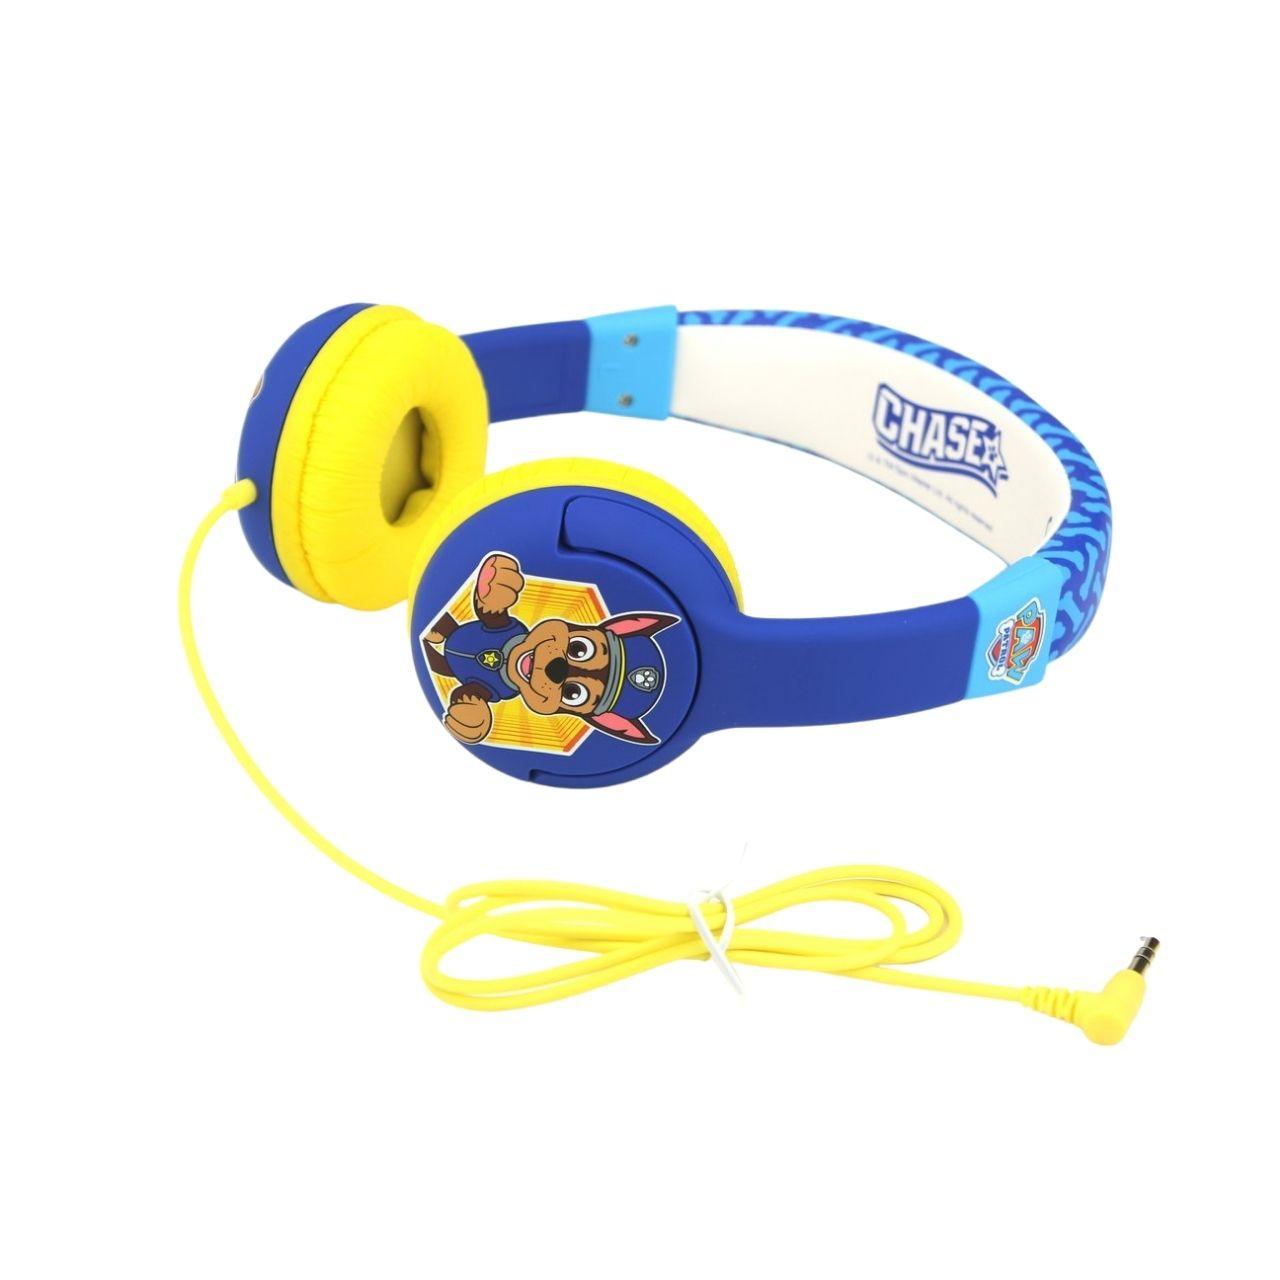 PAW Patrol Chase Blue Kids Headphones - childrensheadphones.co.uk